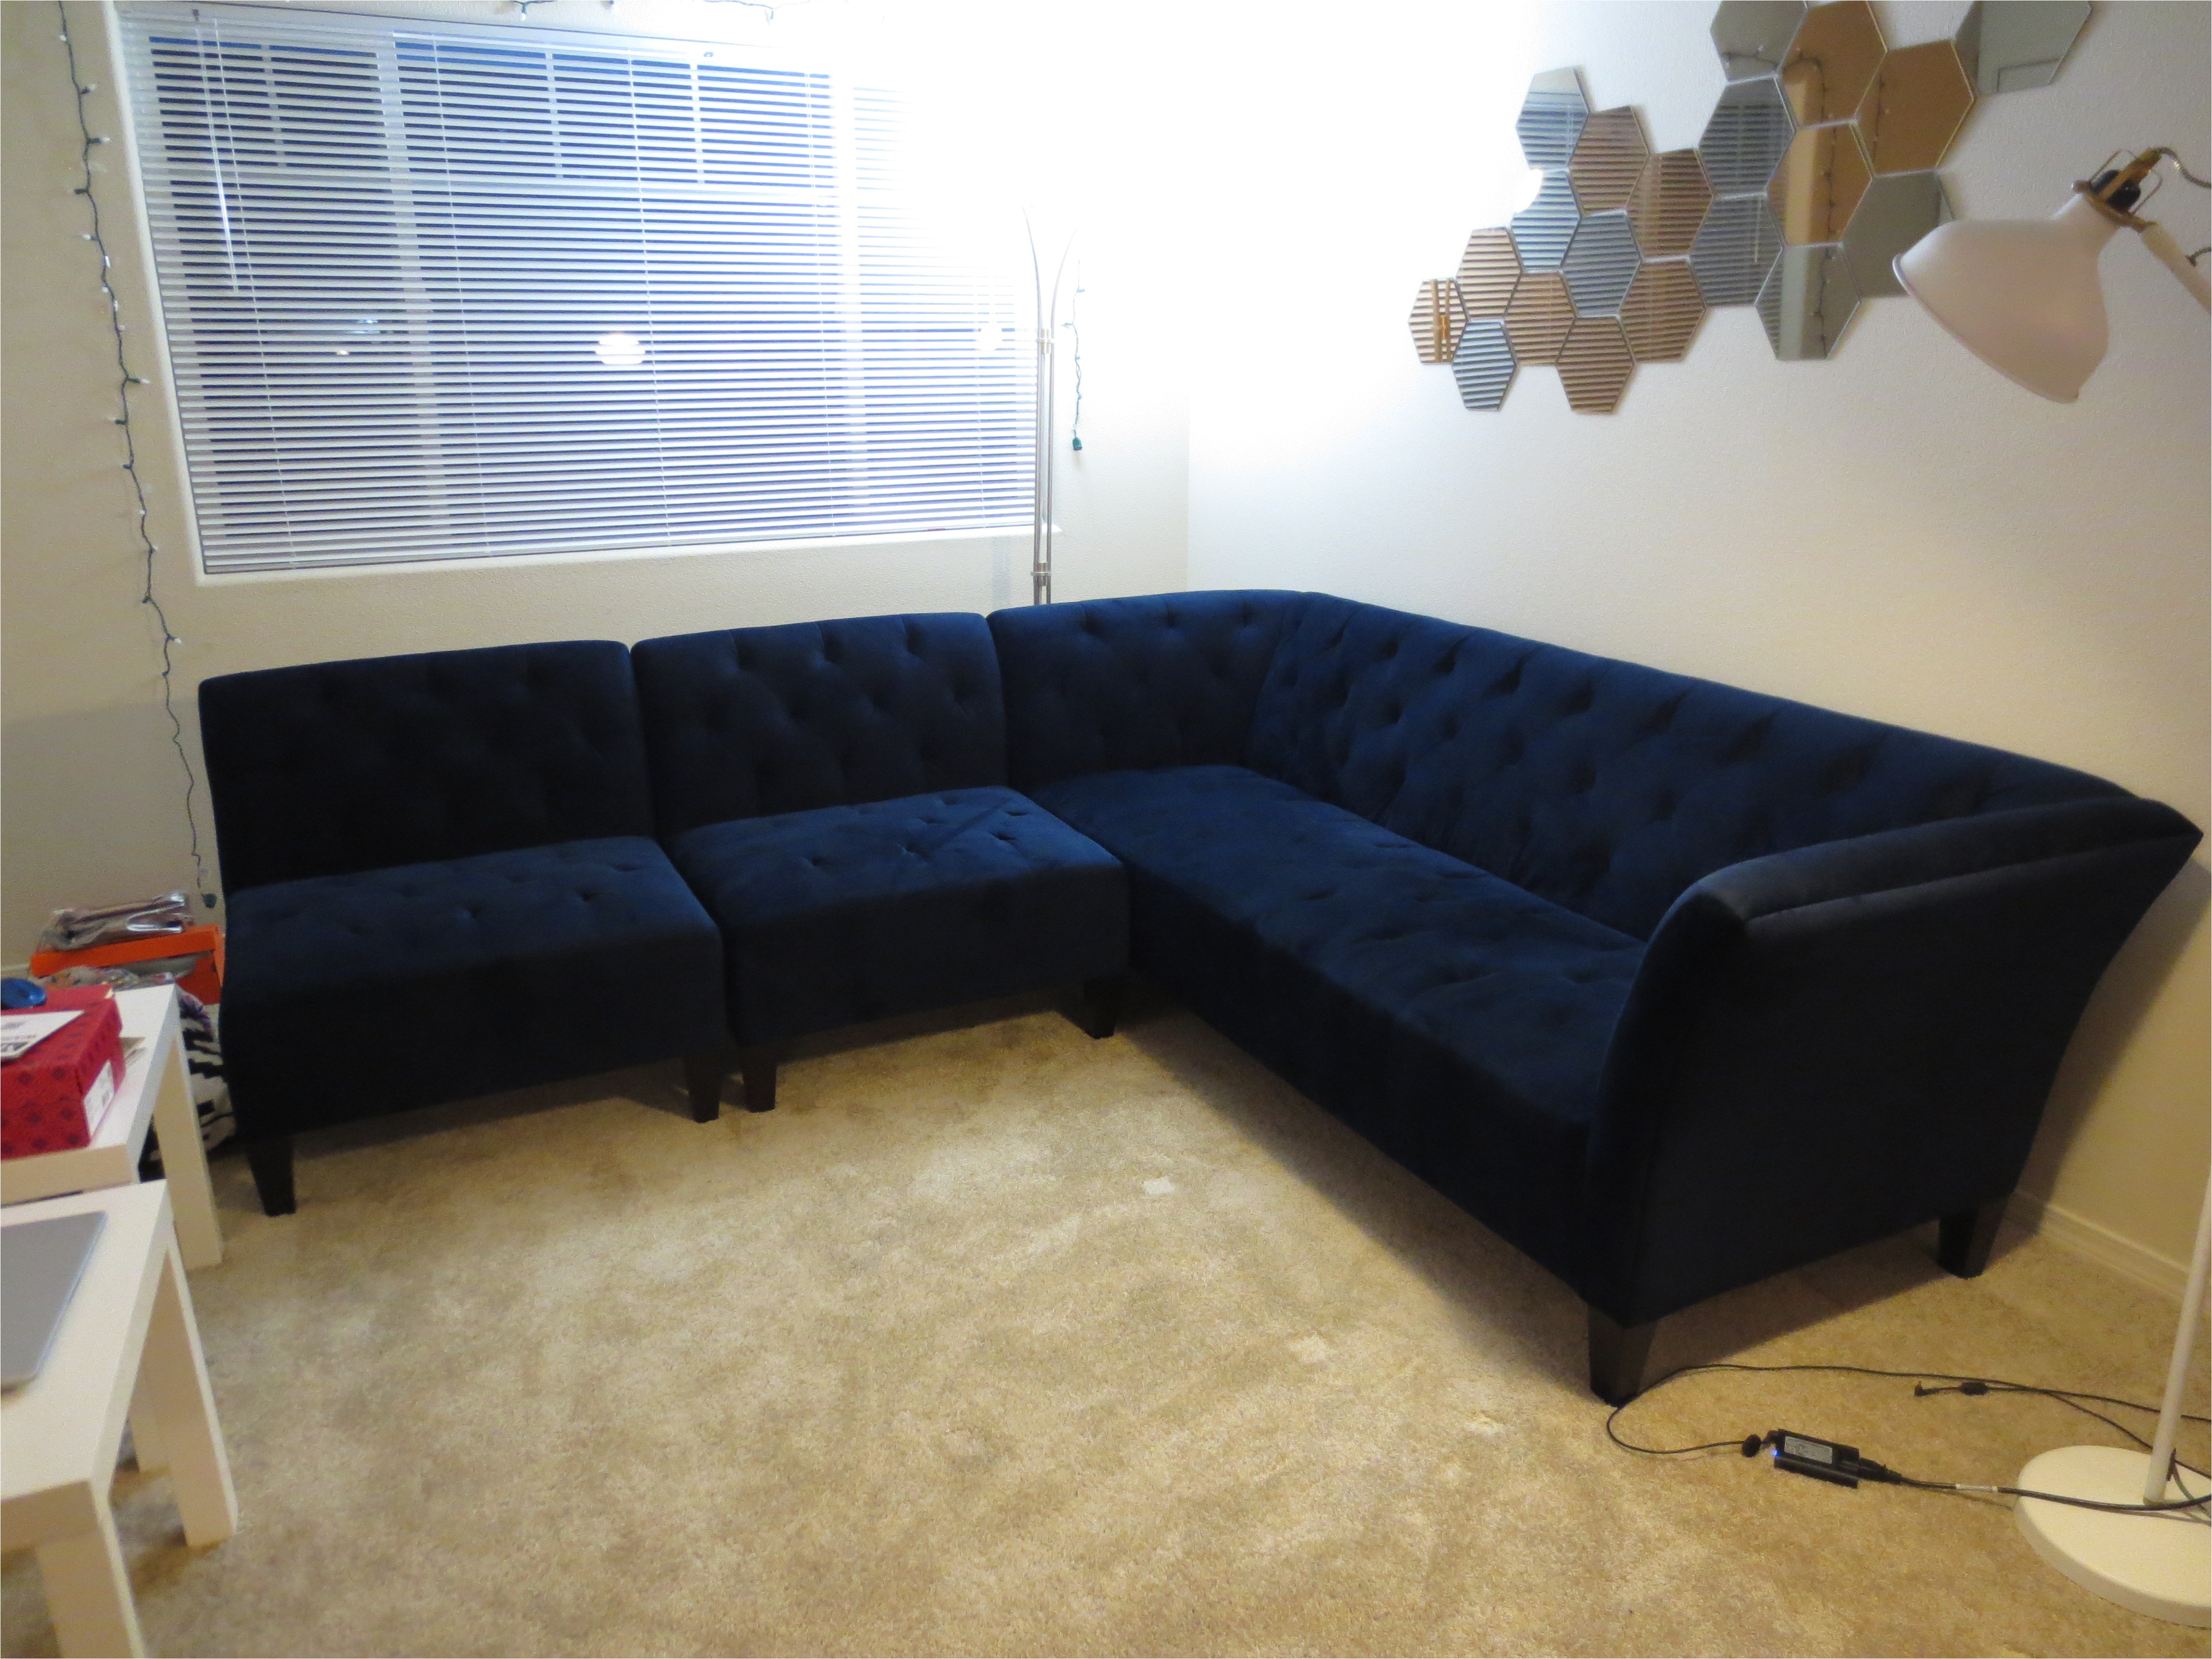 fabulous macys furniture outlet store ideas spacious houston home design popular photos sofa full size of